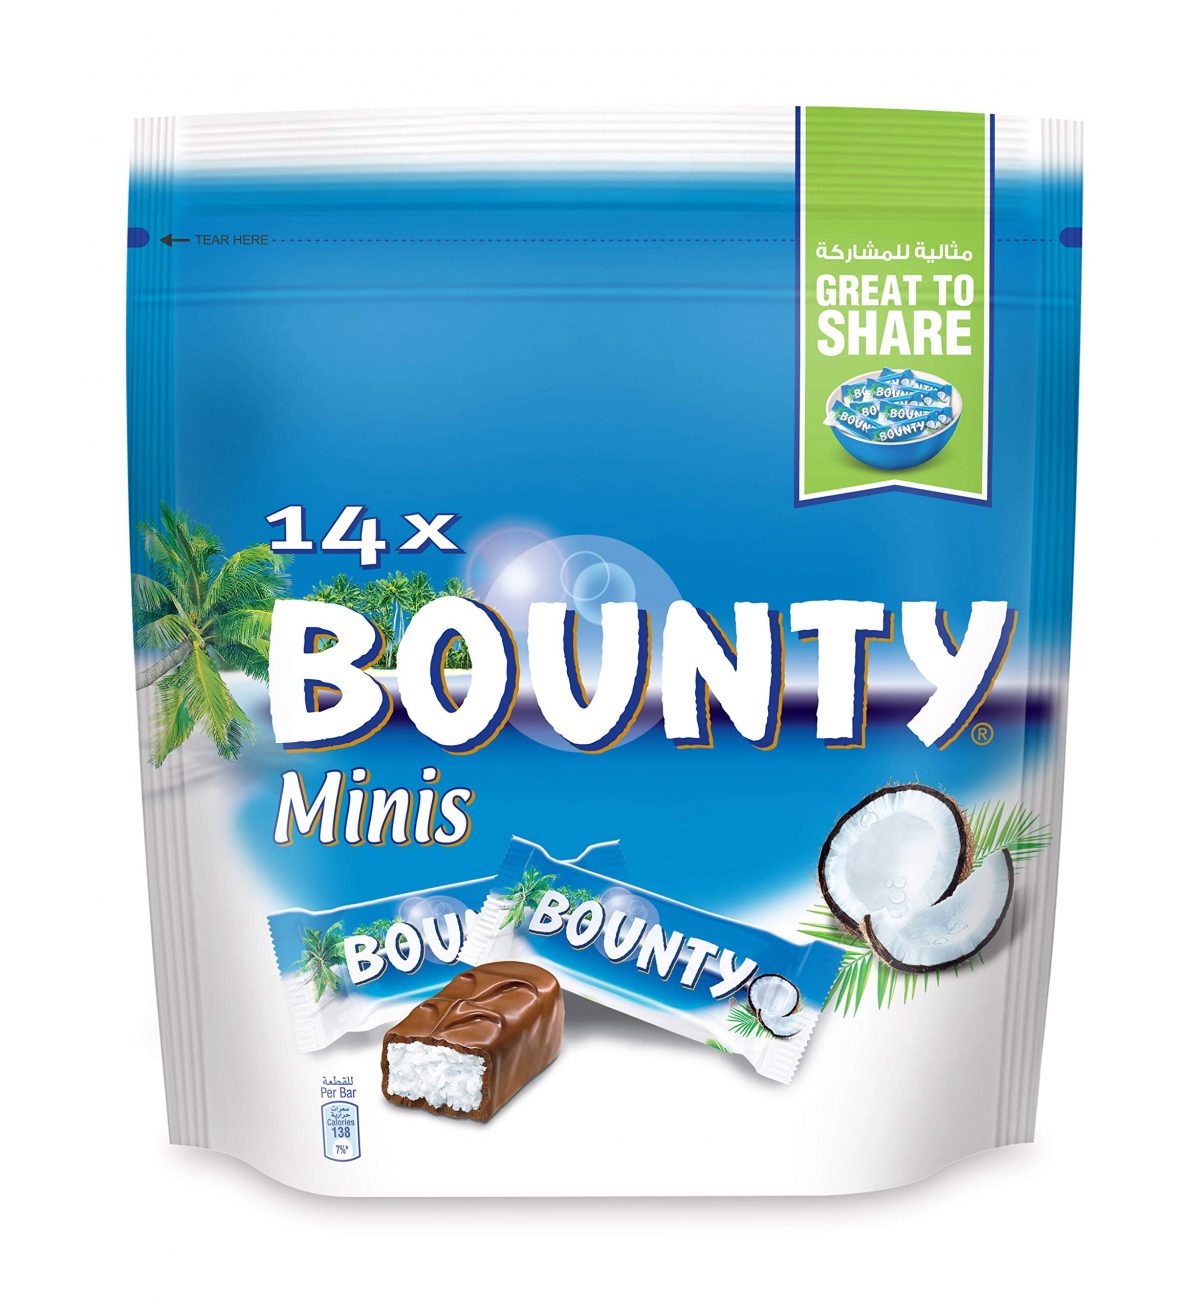 Bounty Minis price im bd